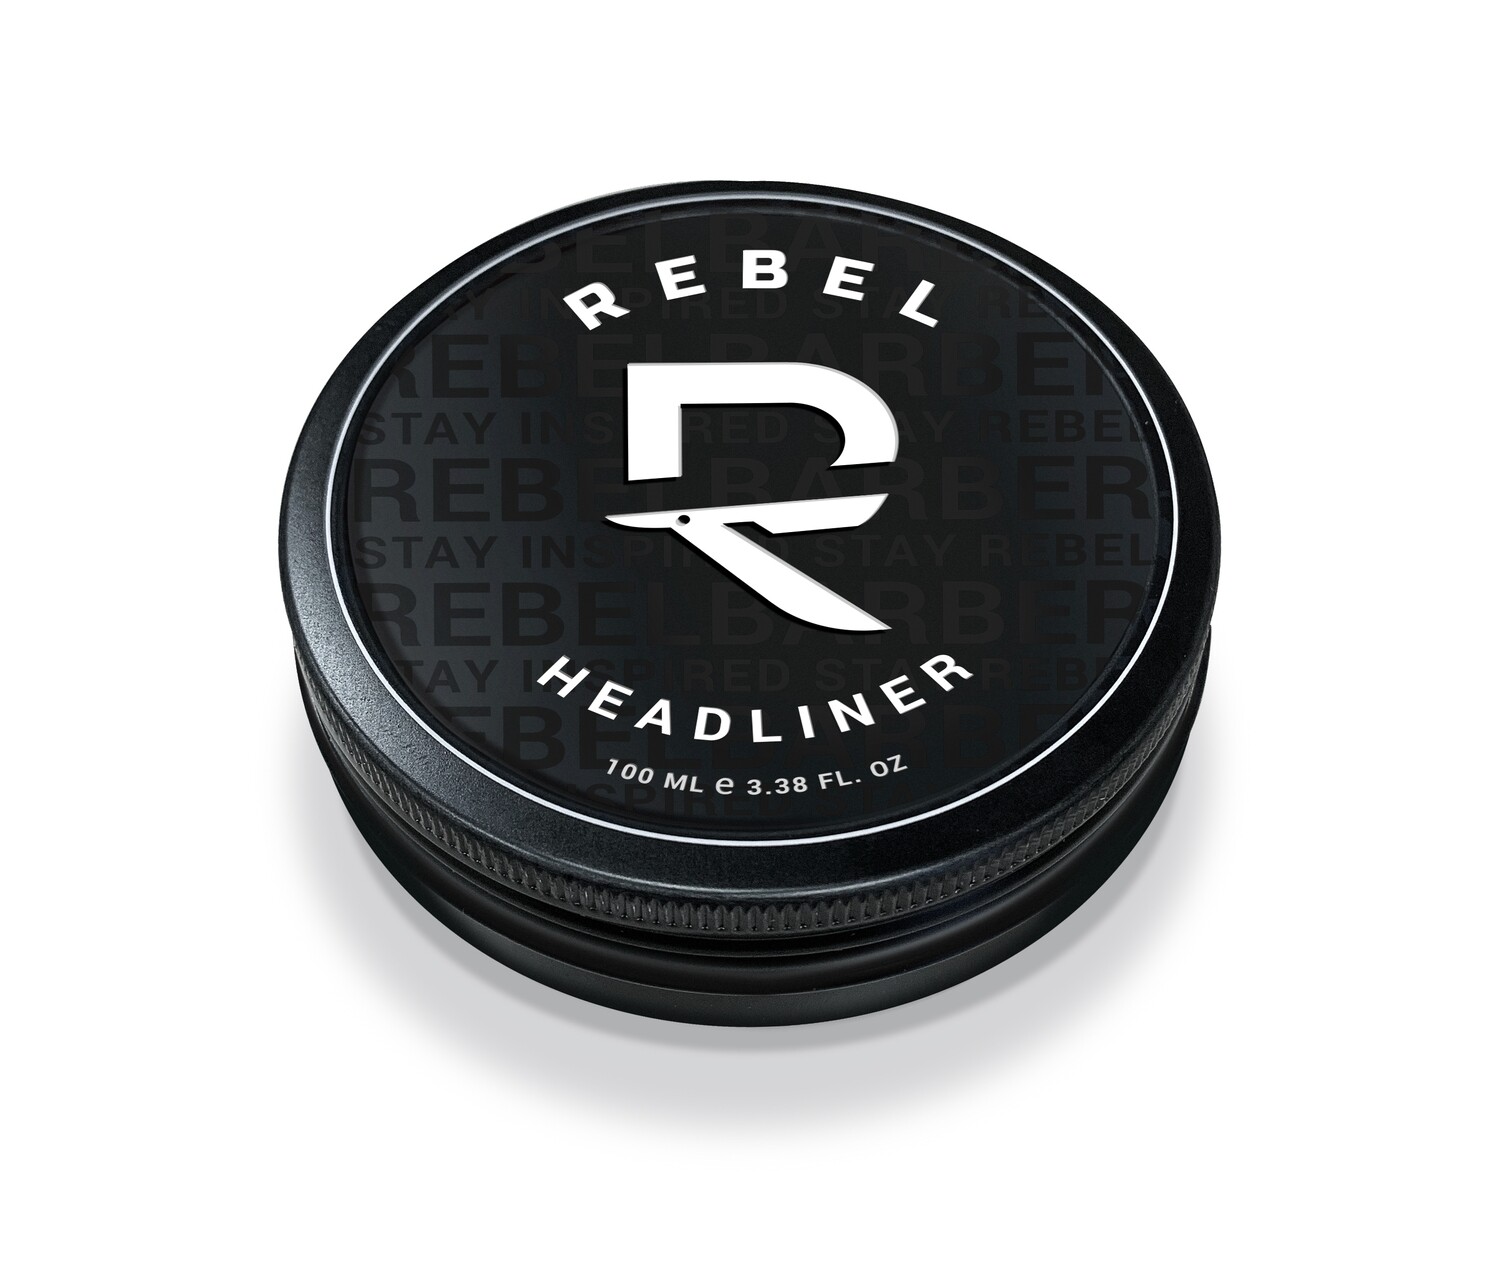 Rebel Barber Headliner - Помада для укладки волос 250 мл